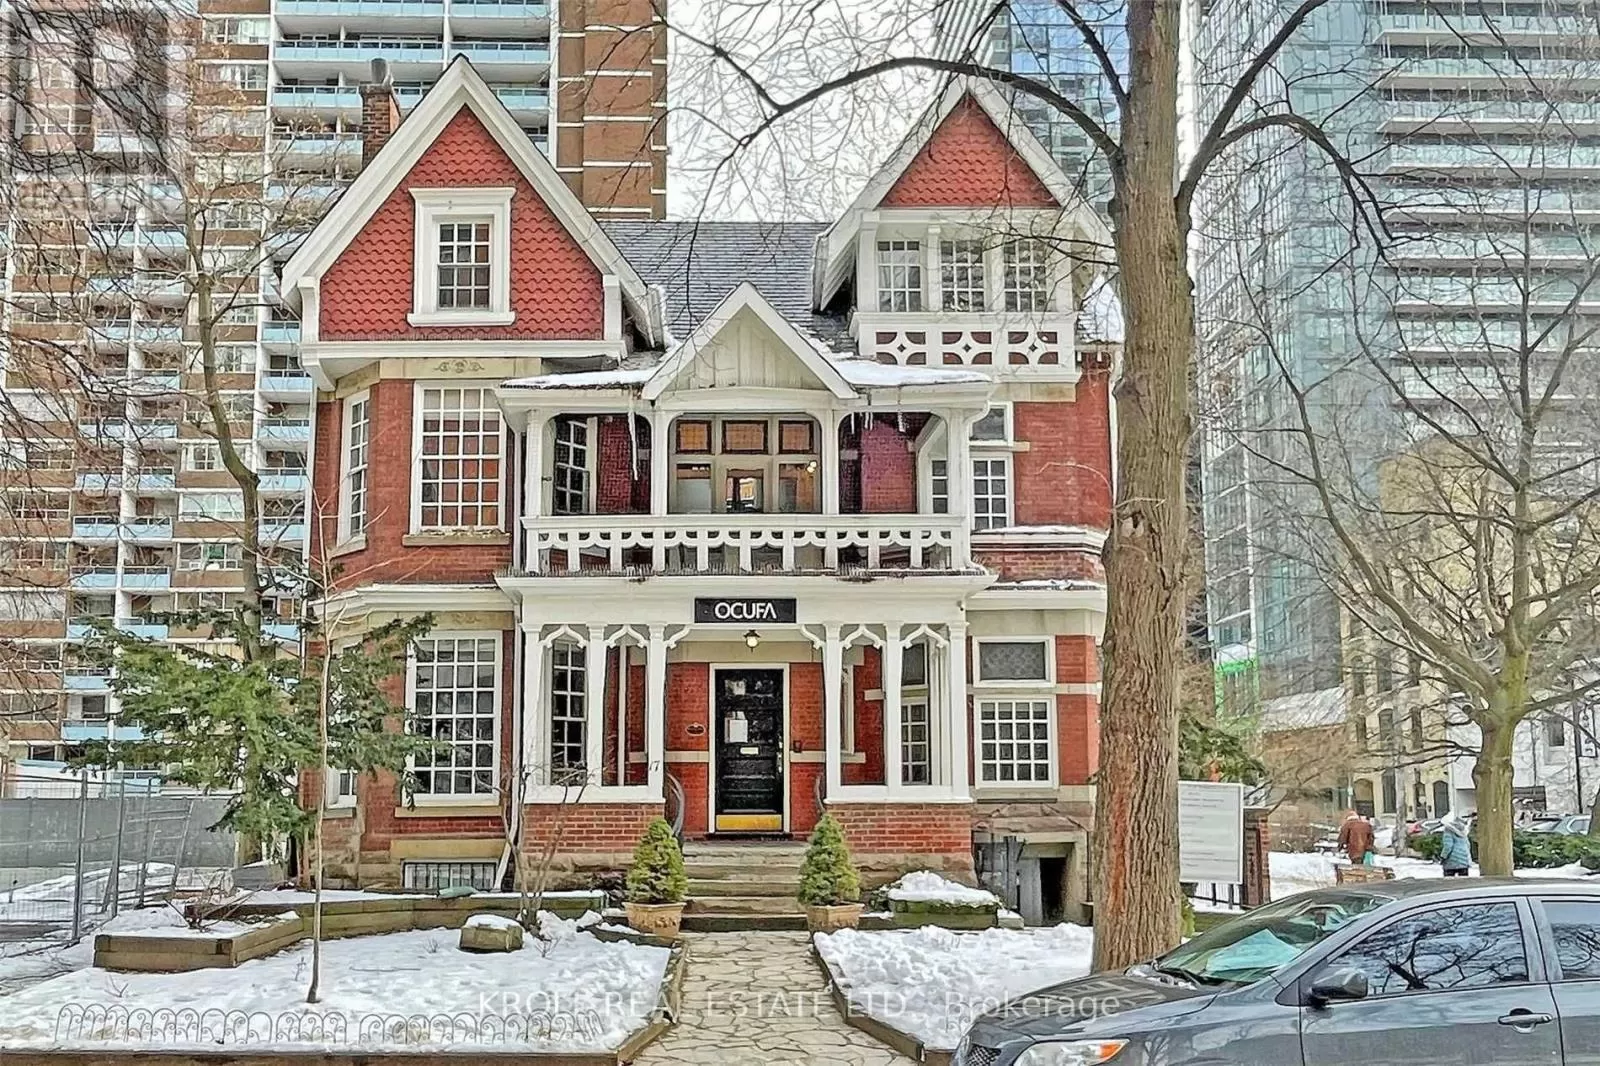 Multi-Family for rent: 17 Isabella Street, Toronto, Ontario M4Y 1M7